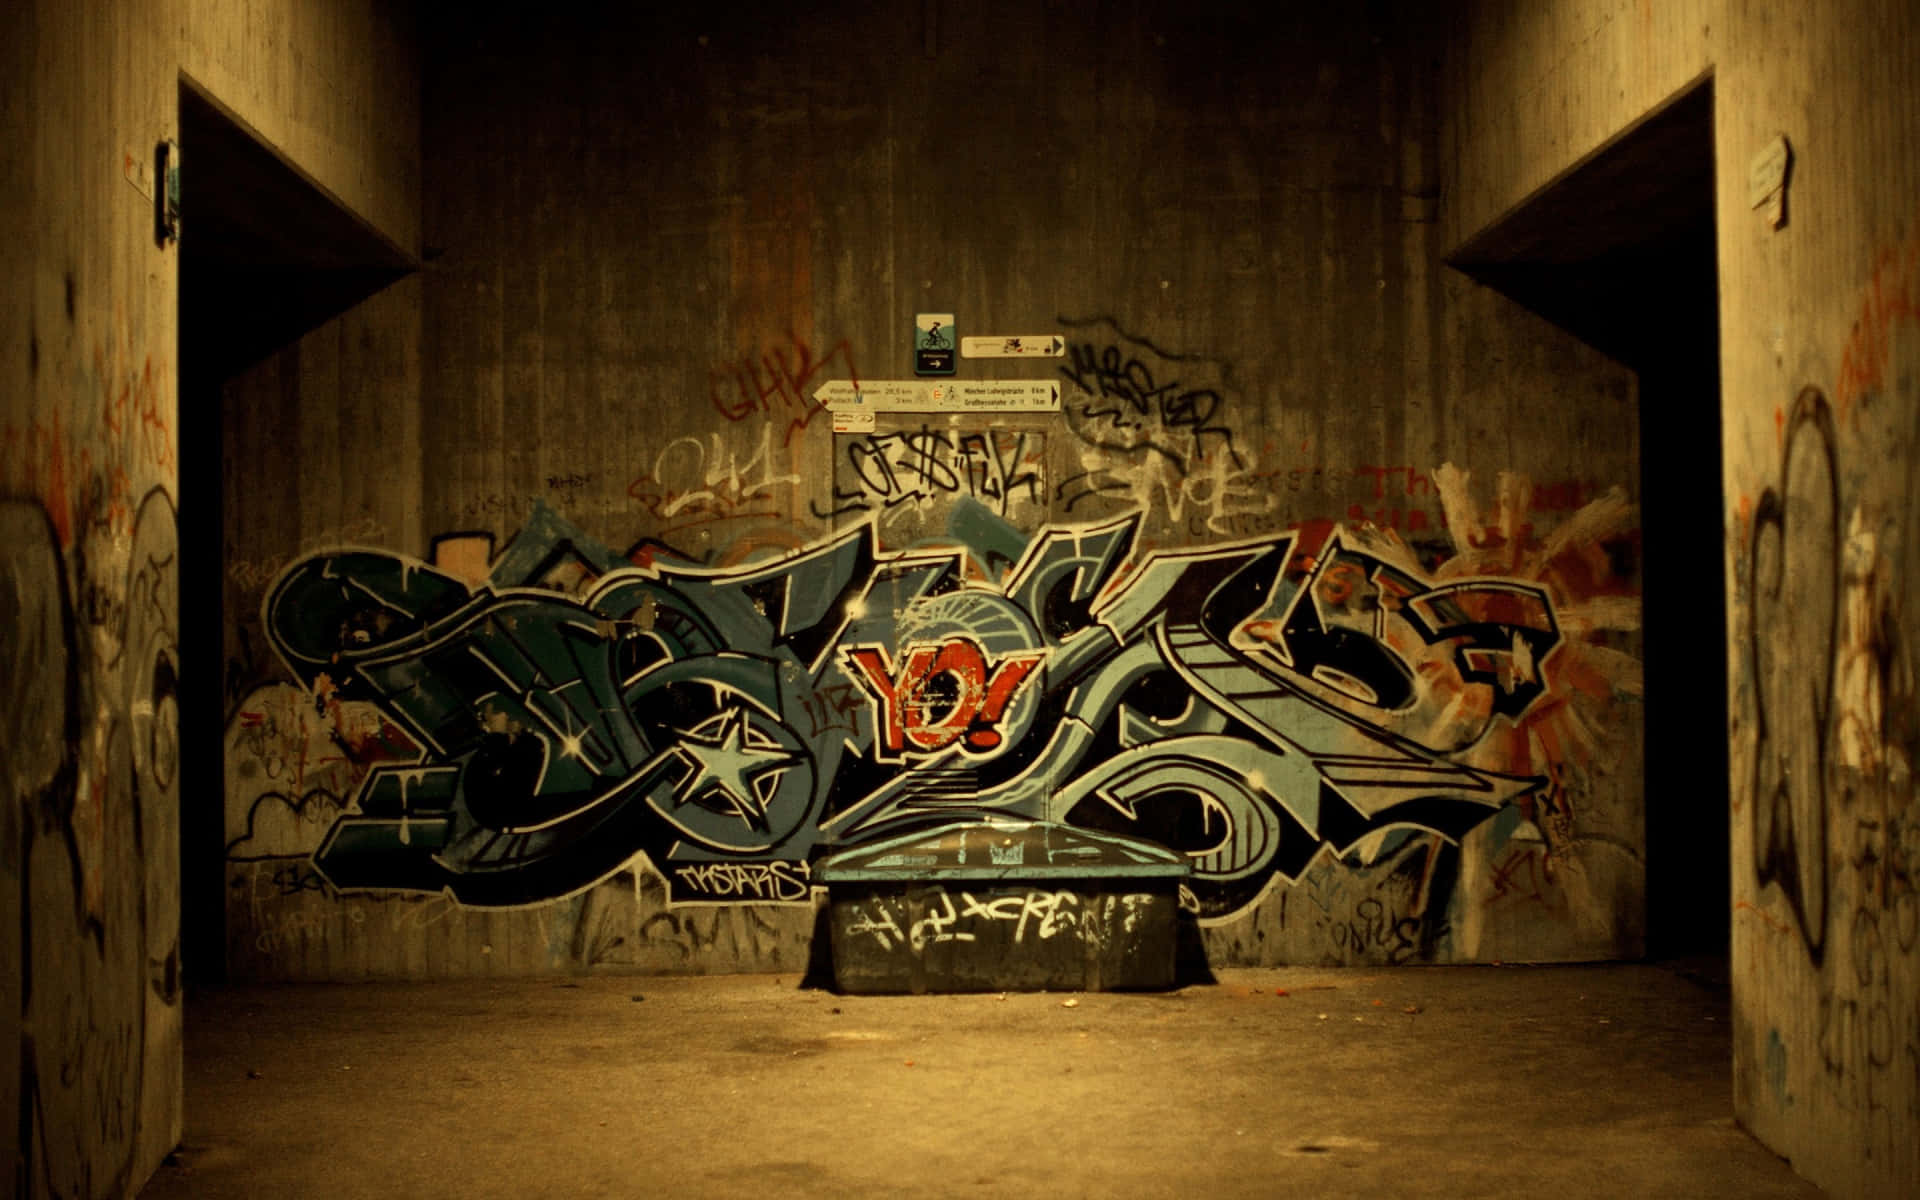 Graffiti Wall Art In An Empty Space Wallpaper